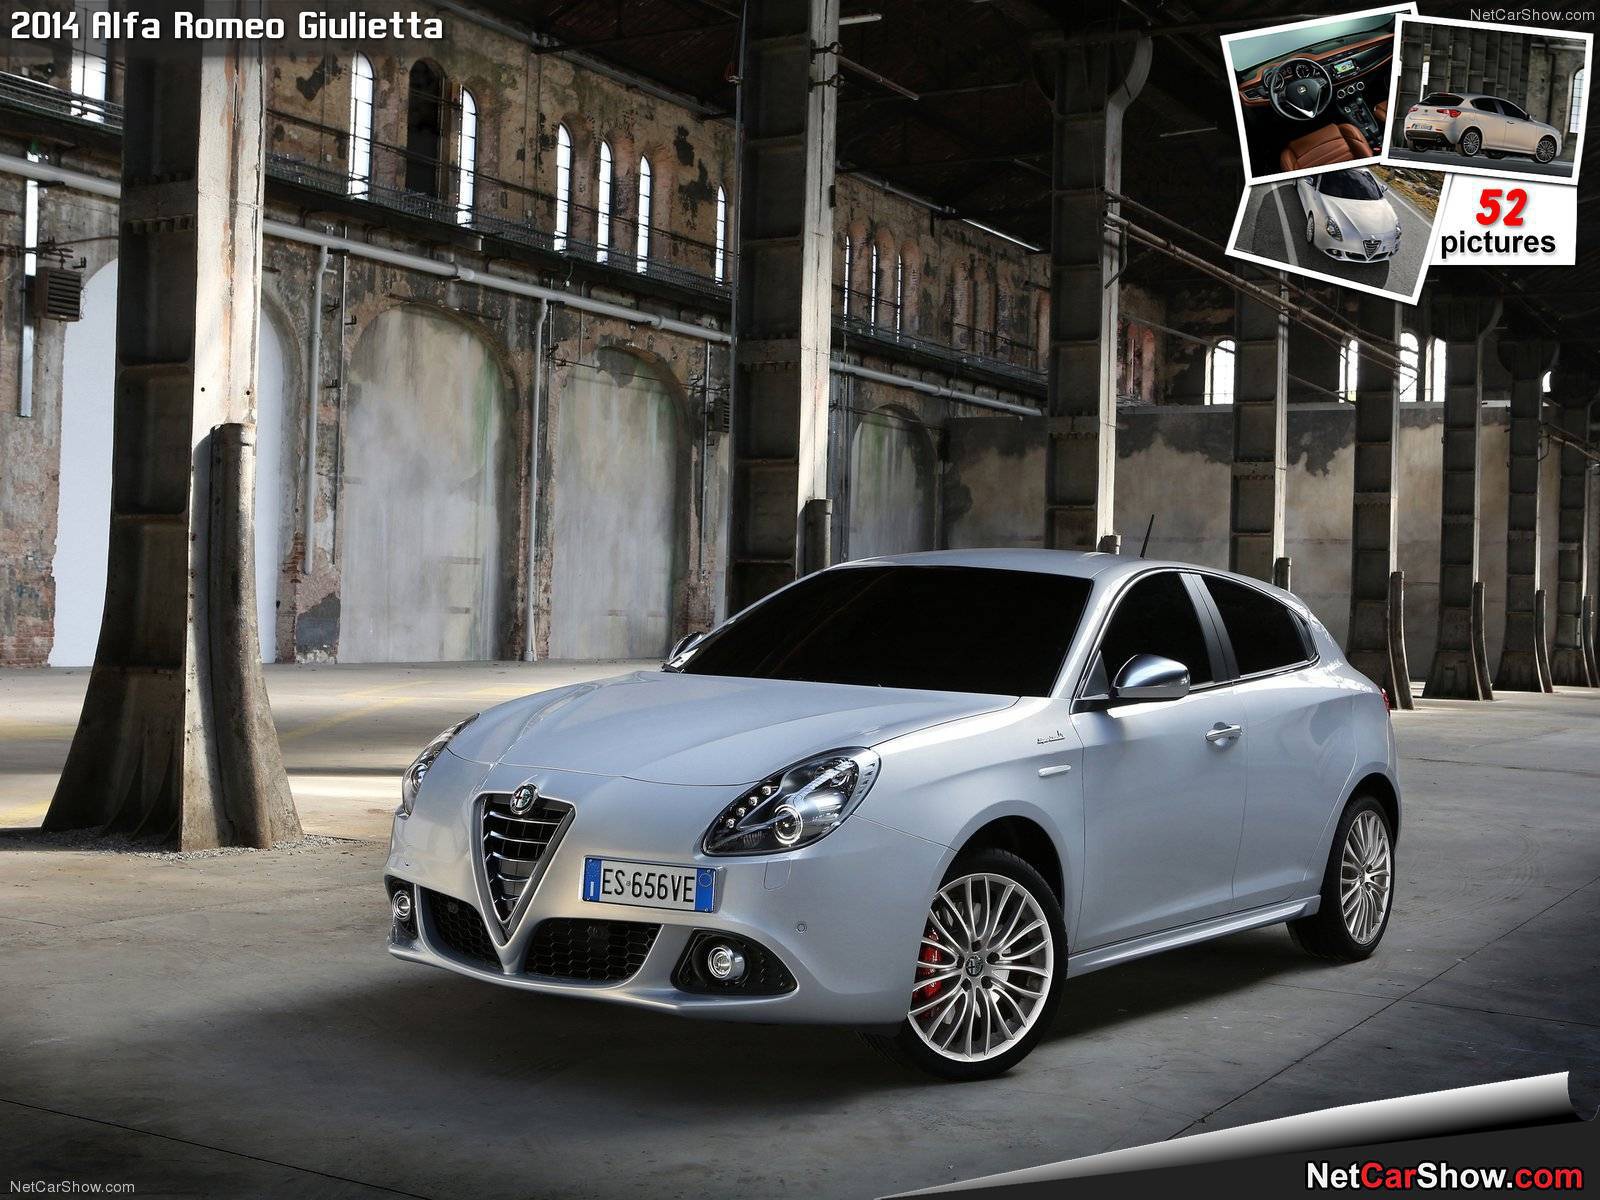 Надежный автомобиль Alfa Romeo giulietta 2014